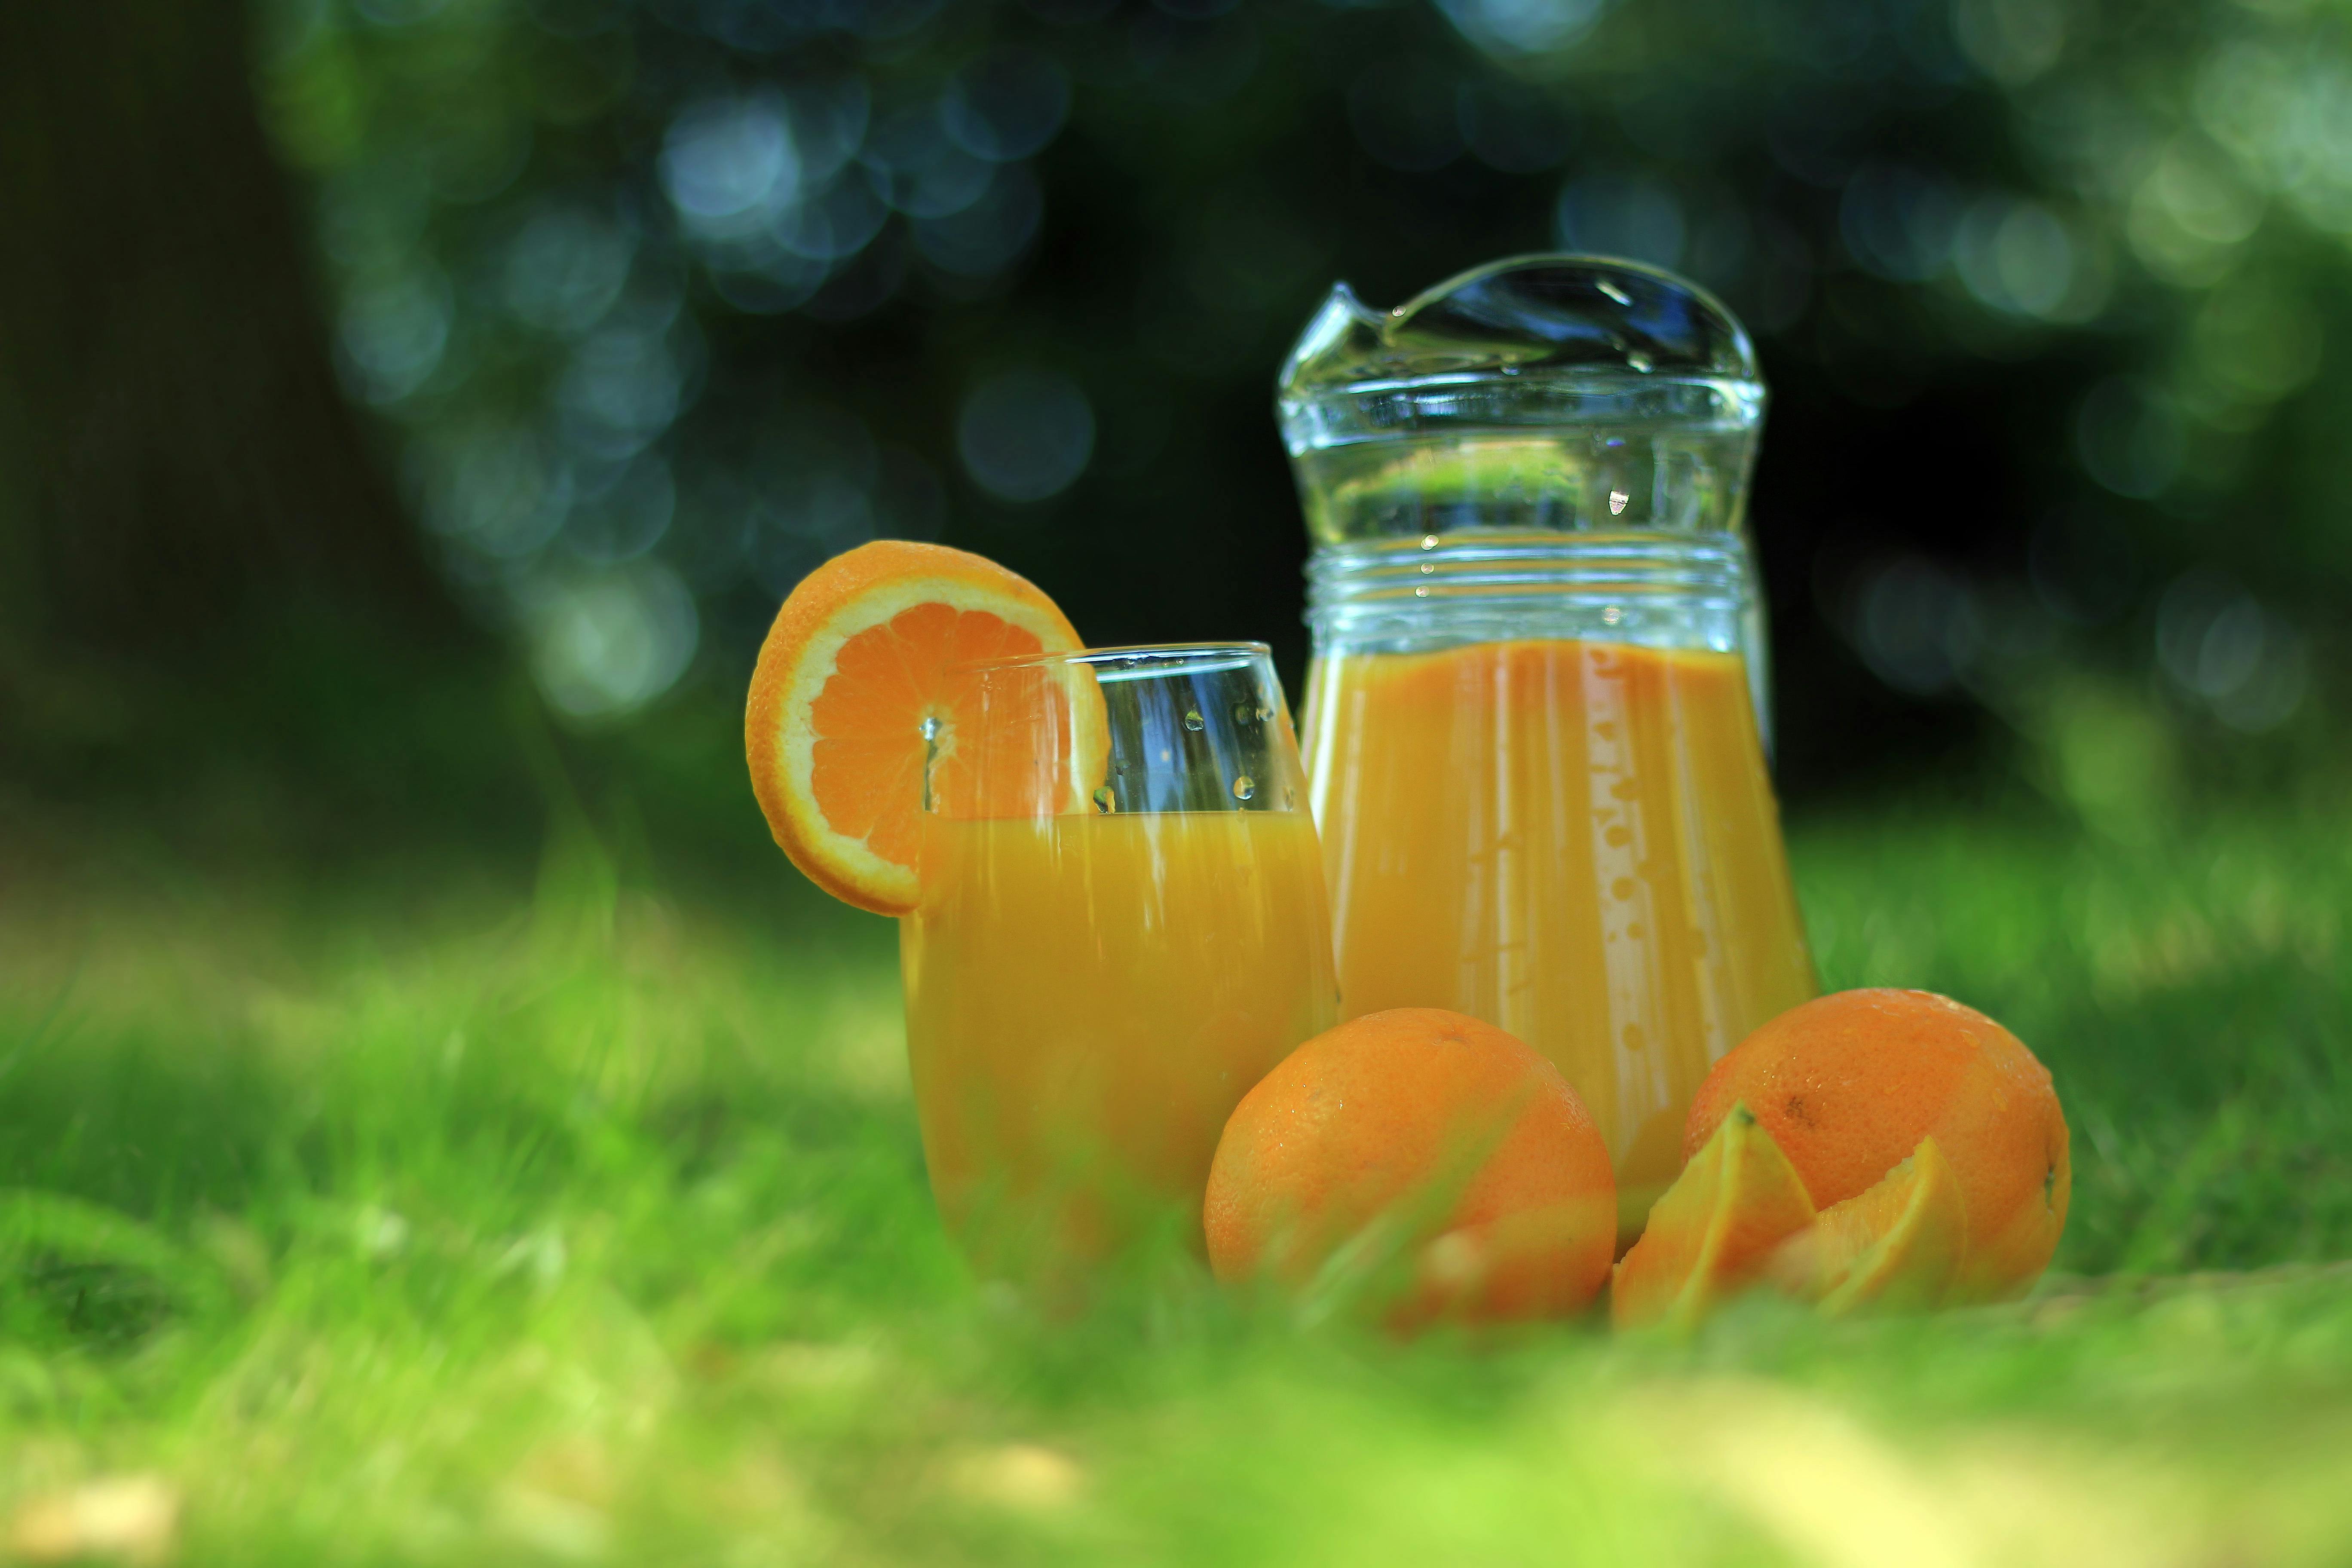 https://images.pexels.com/photos/3584/healthy-grass-orange-juice-health.jpg?cs=srgb&dl=pexels-j%C3%A9shoots-3584.jpg&fm=jpg